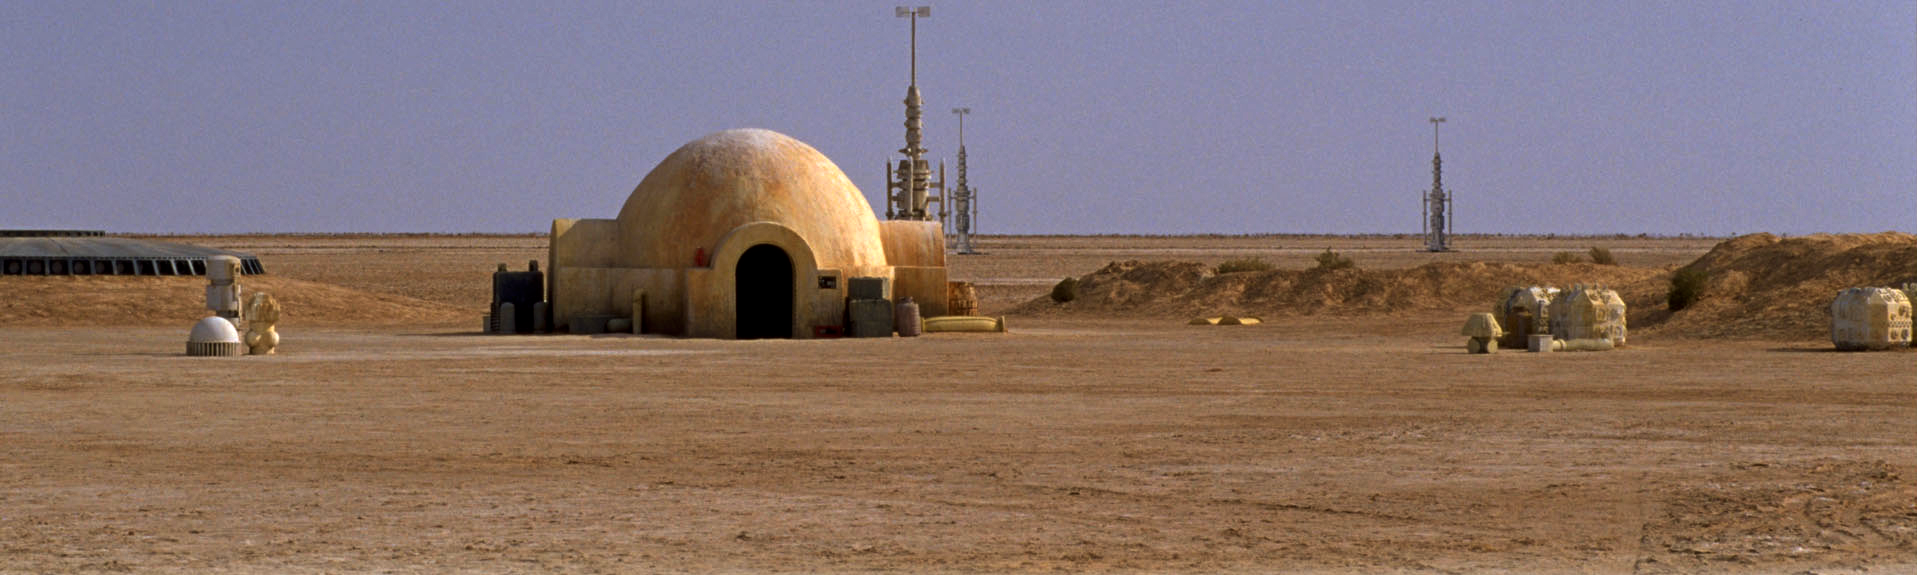 Image result for tatooine moisture